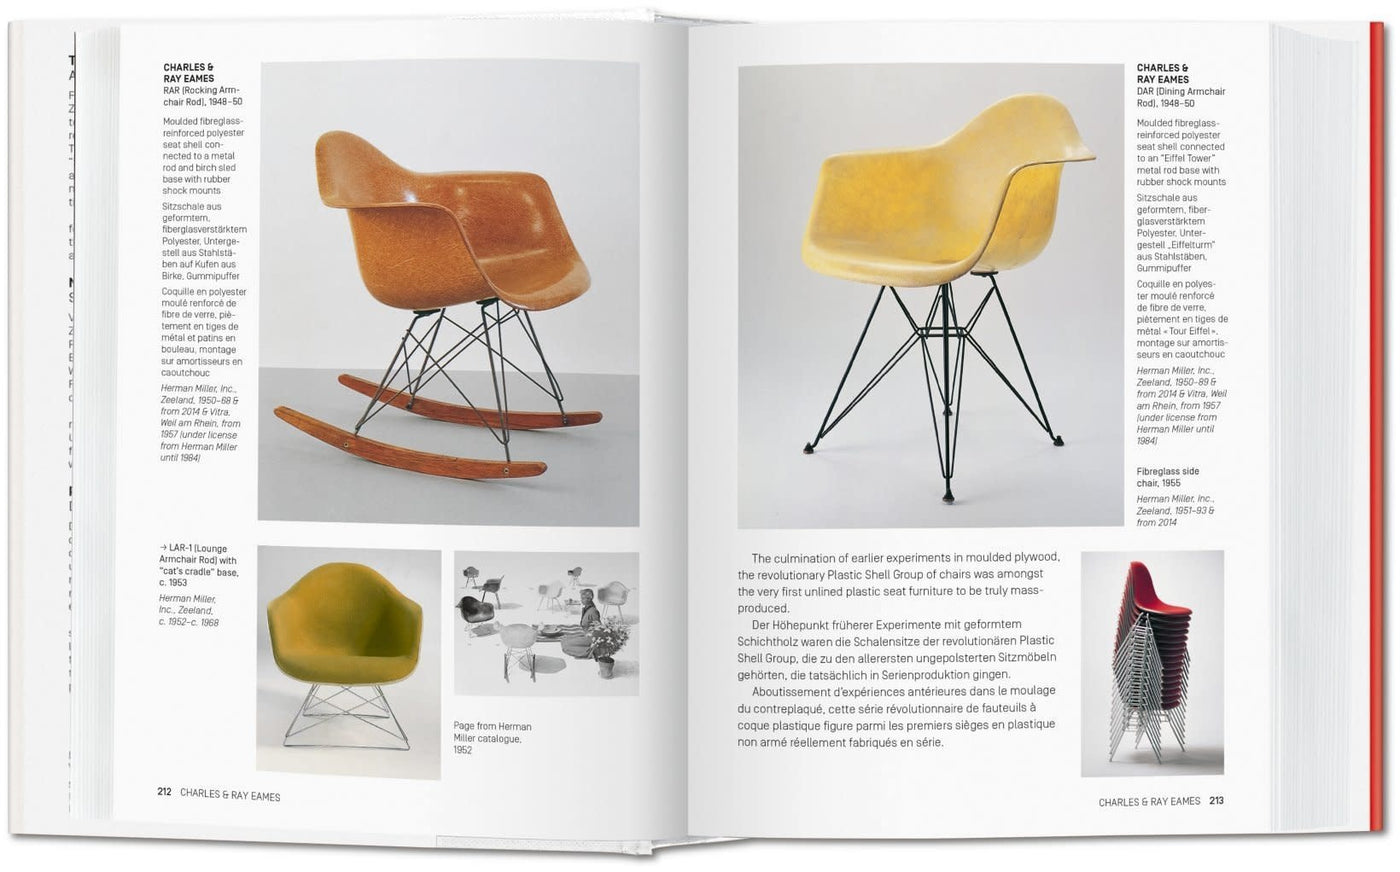 BU Hardcover: 1000 Chairs book